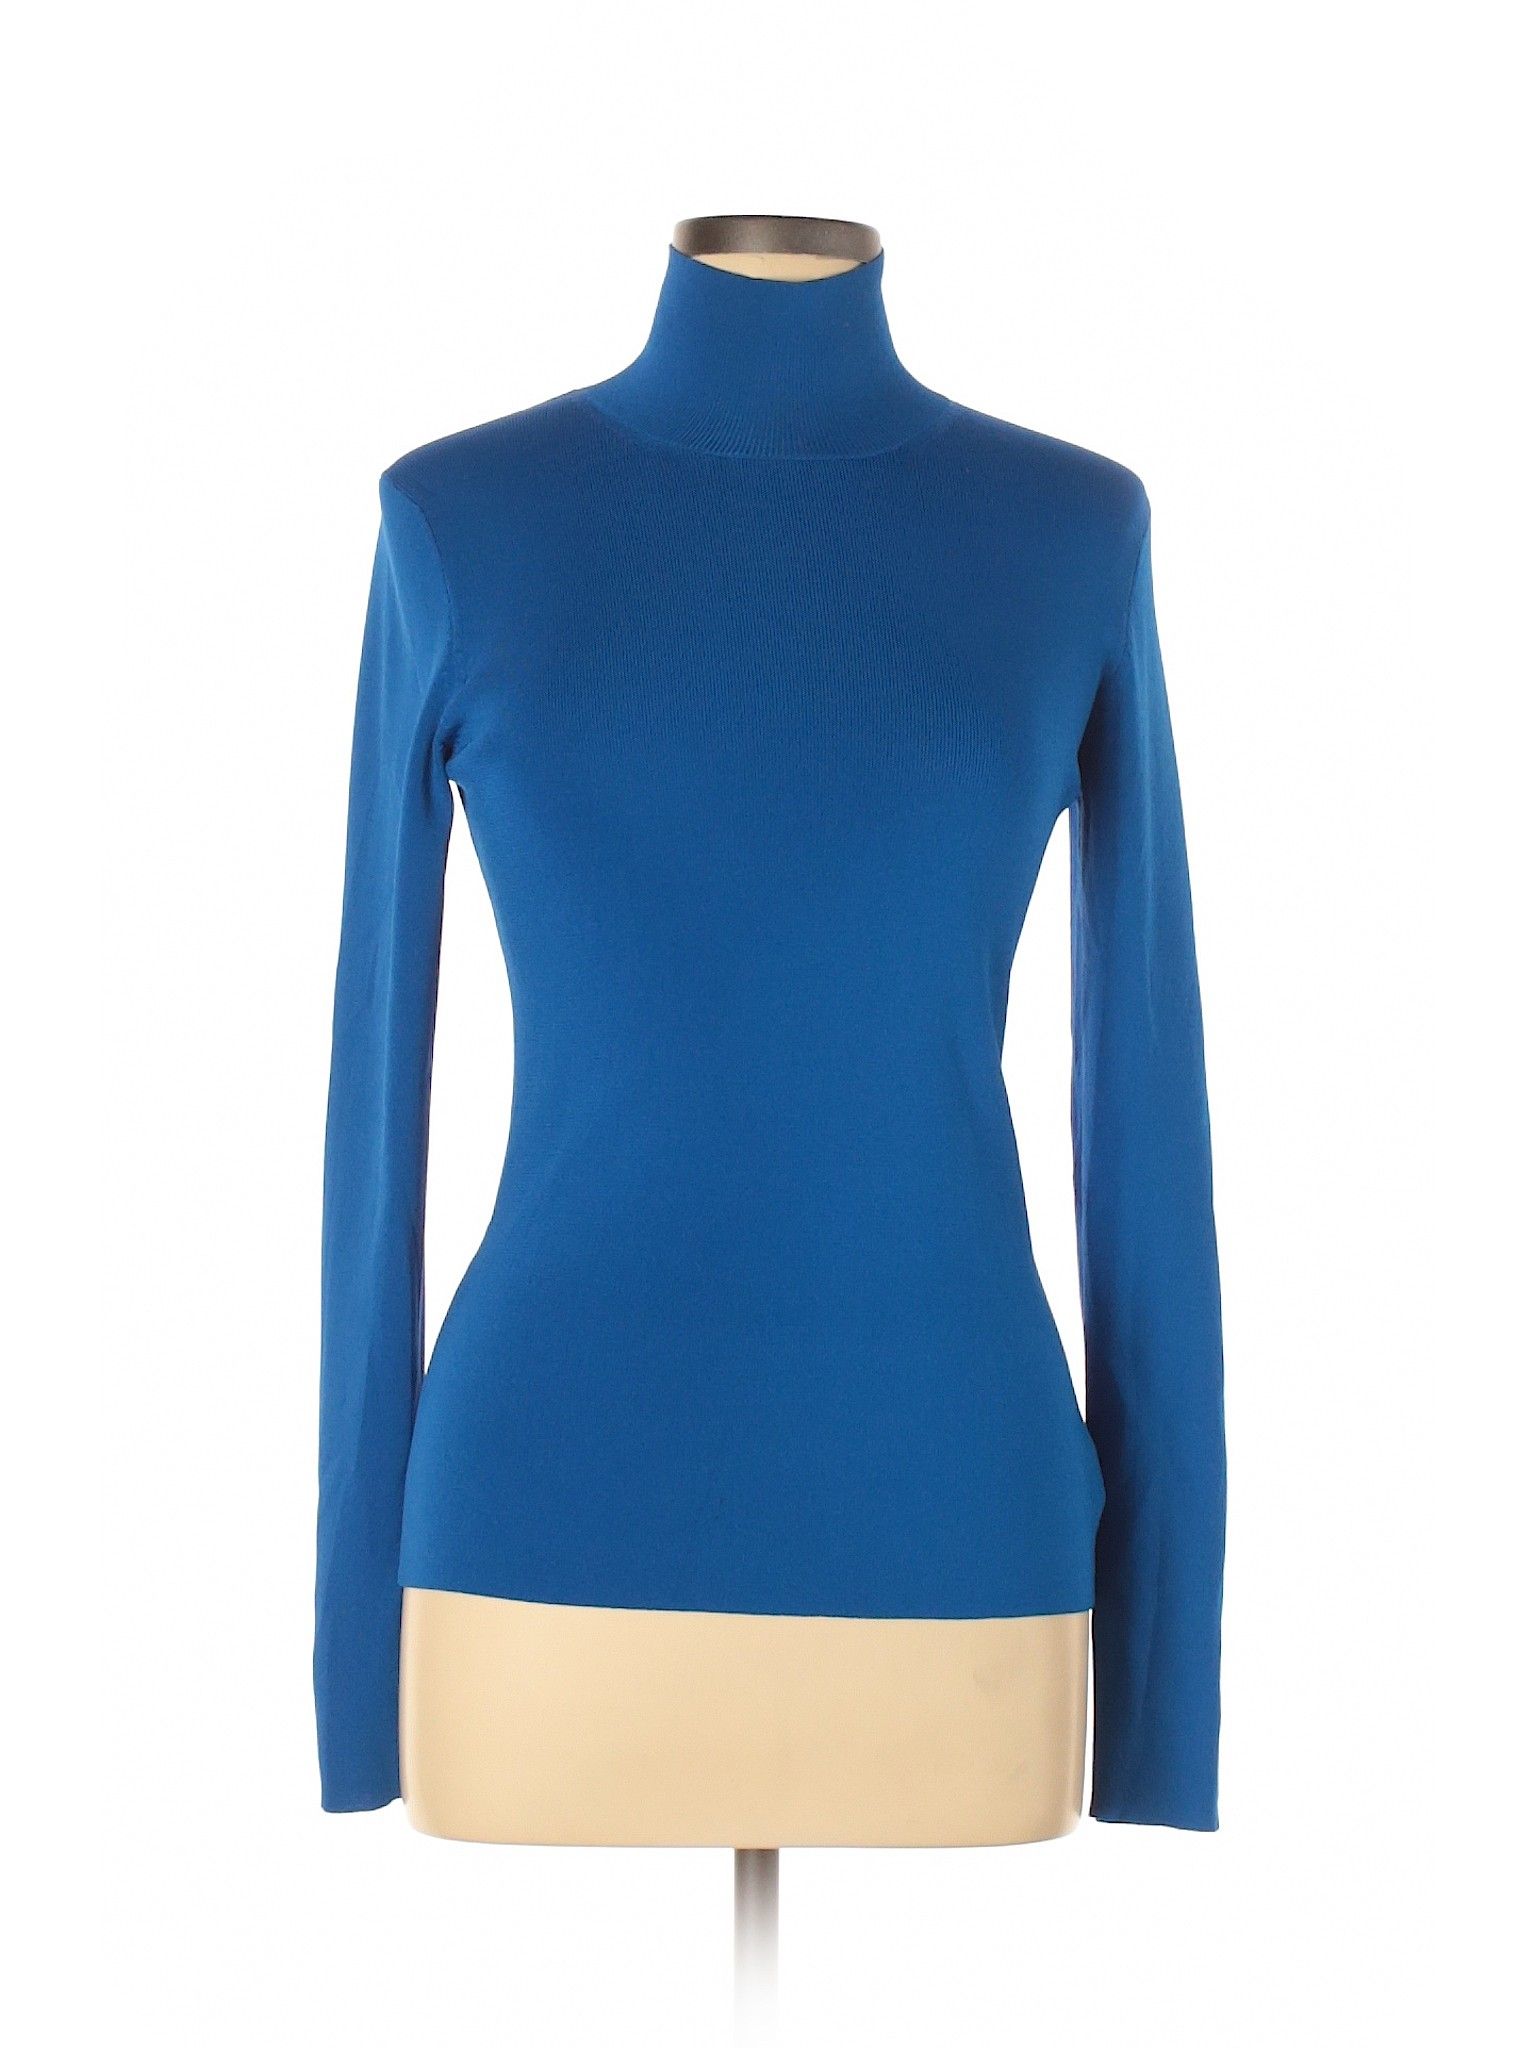 Dana Buchman Turtleneck Sweater Size 12: Blue Women's Tops - 55713663 | thredUP